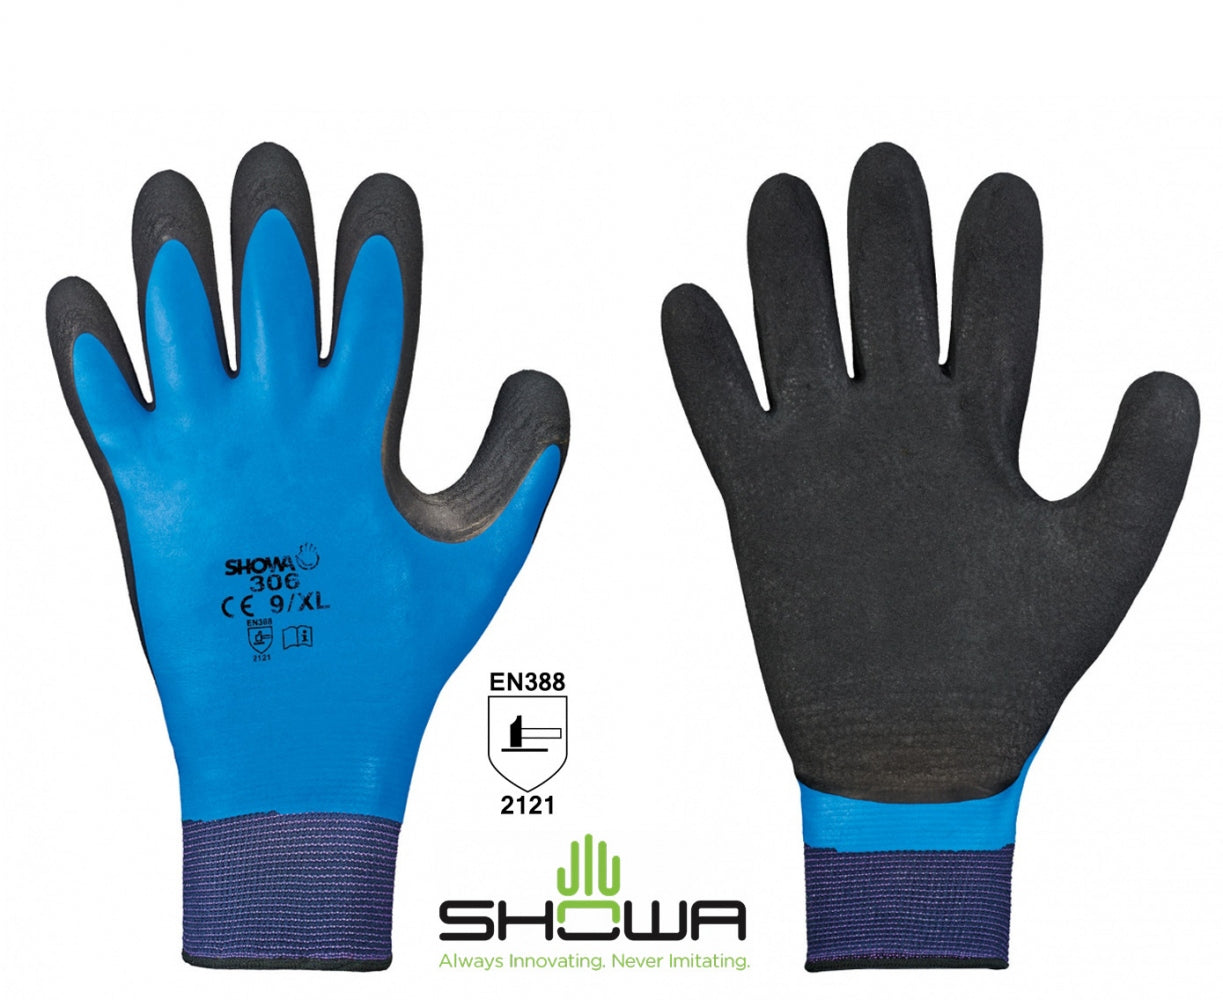 Showa 306 Latex Glove